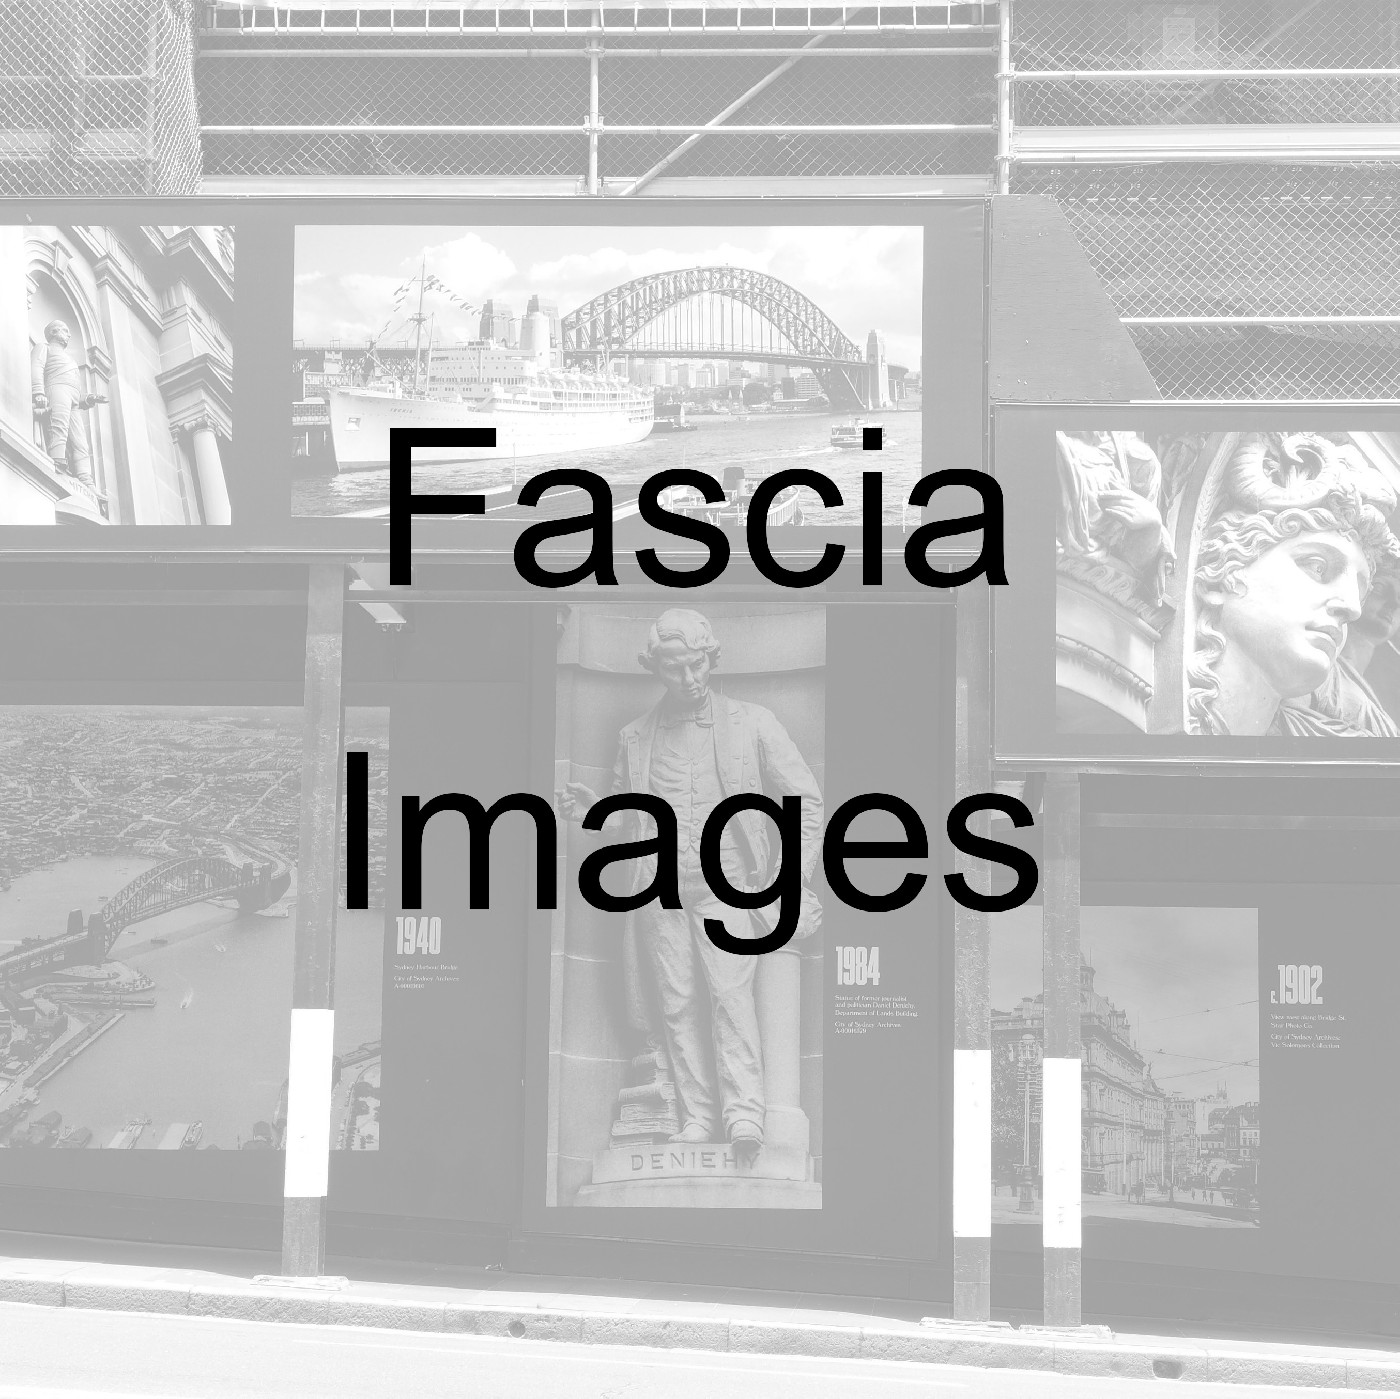 Camperdown - Fascia Images